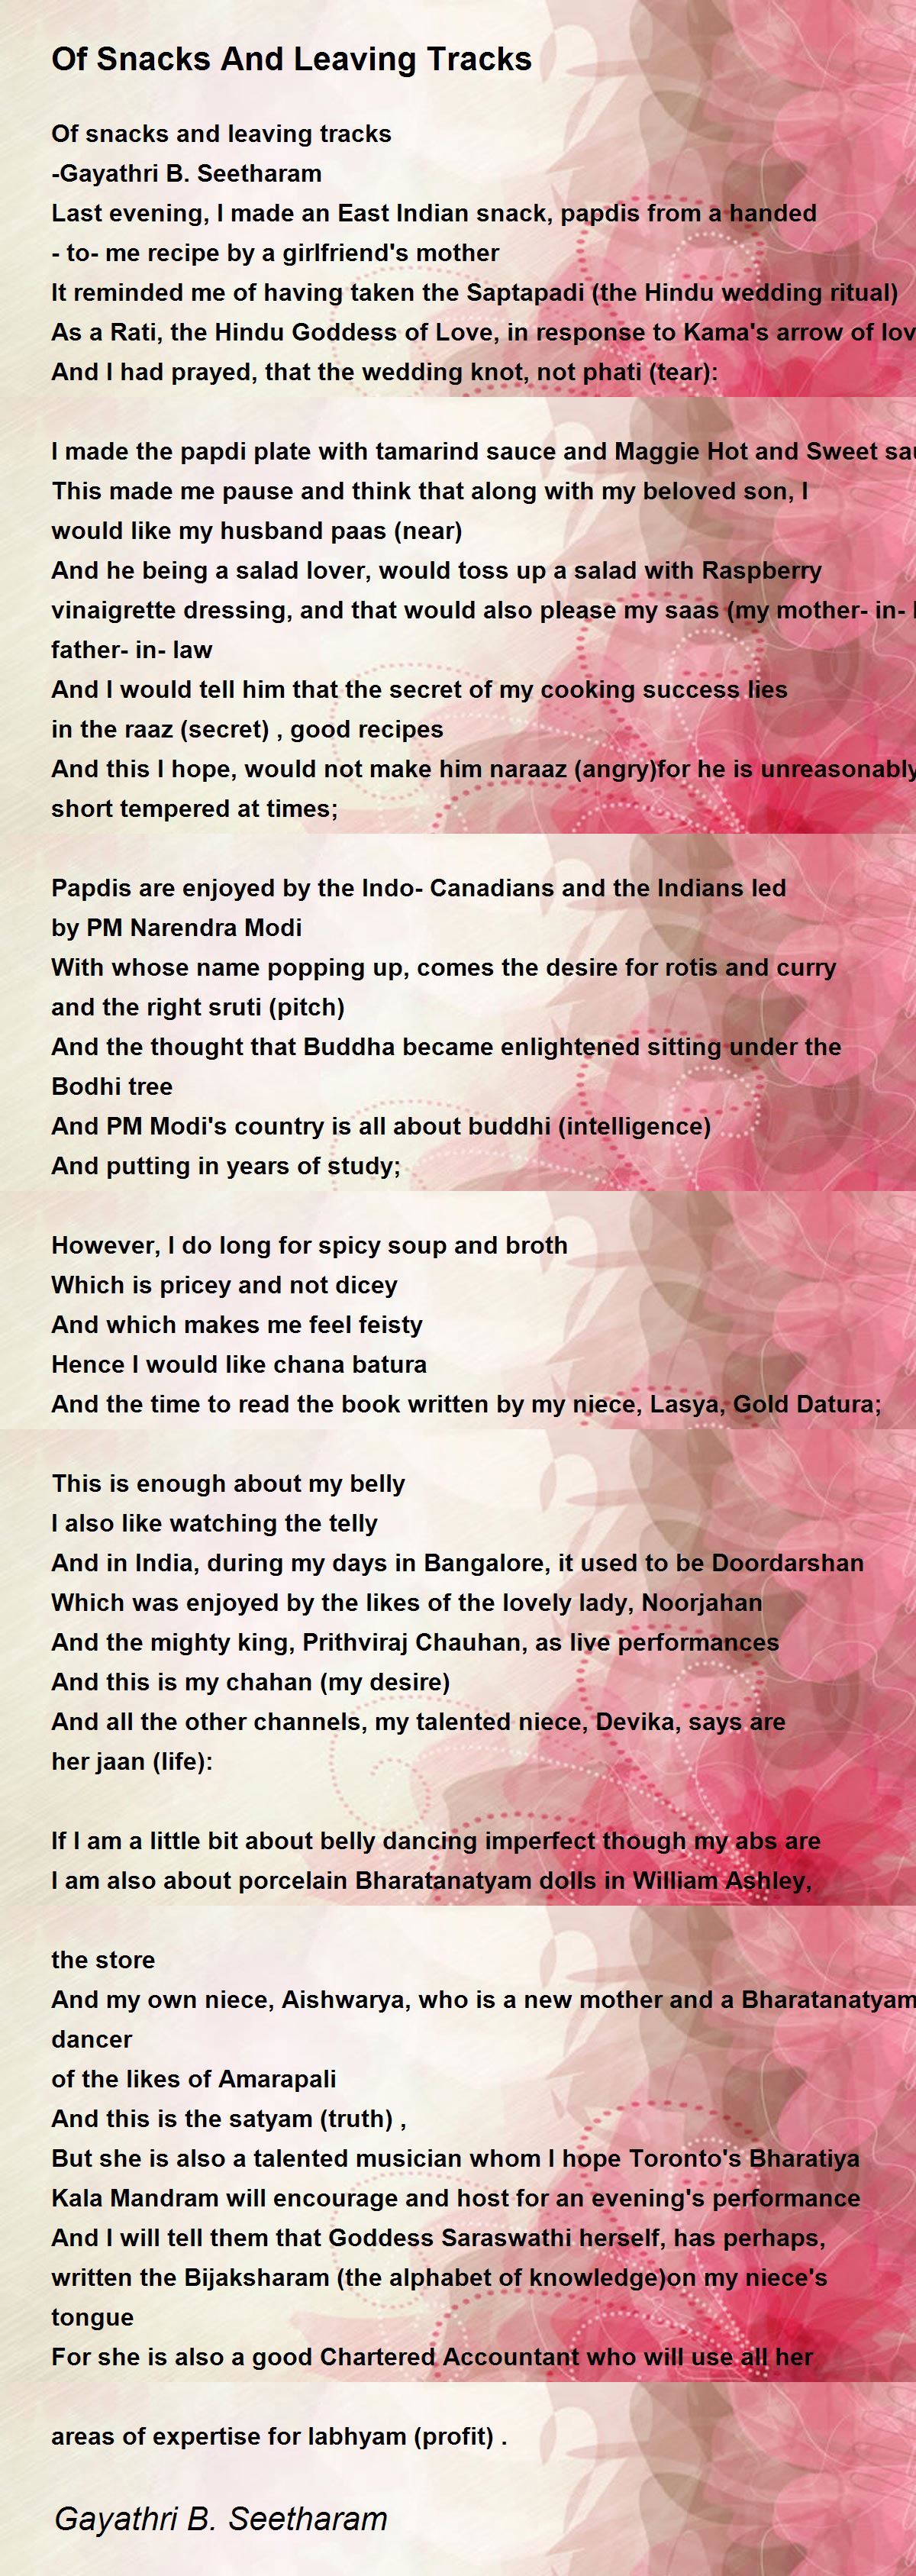 Of Snacks And Leaving Tracks Poem by Gayathri Seetharam - Poem Hunter